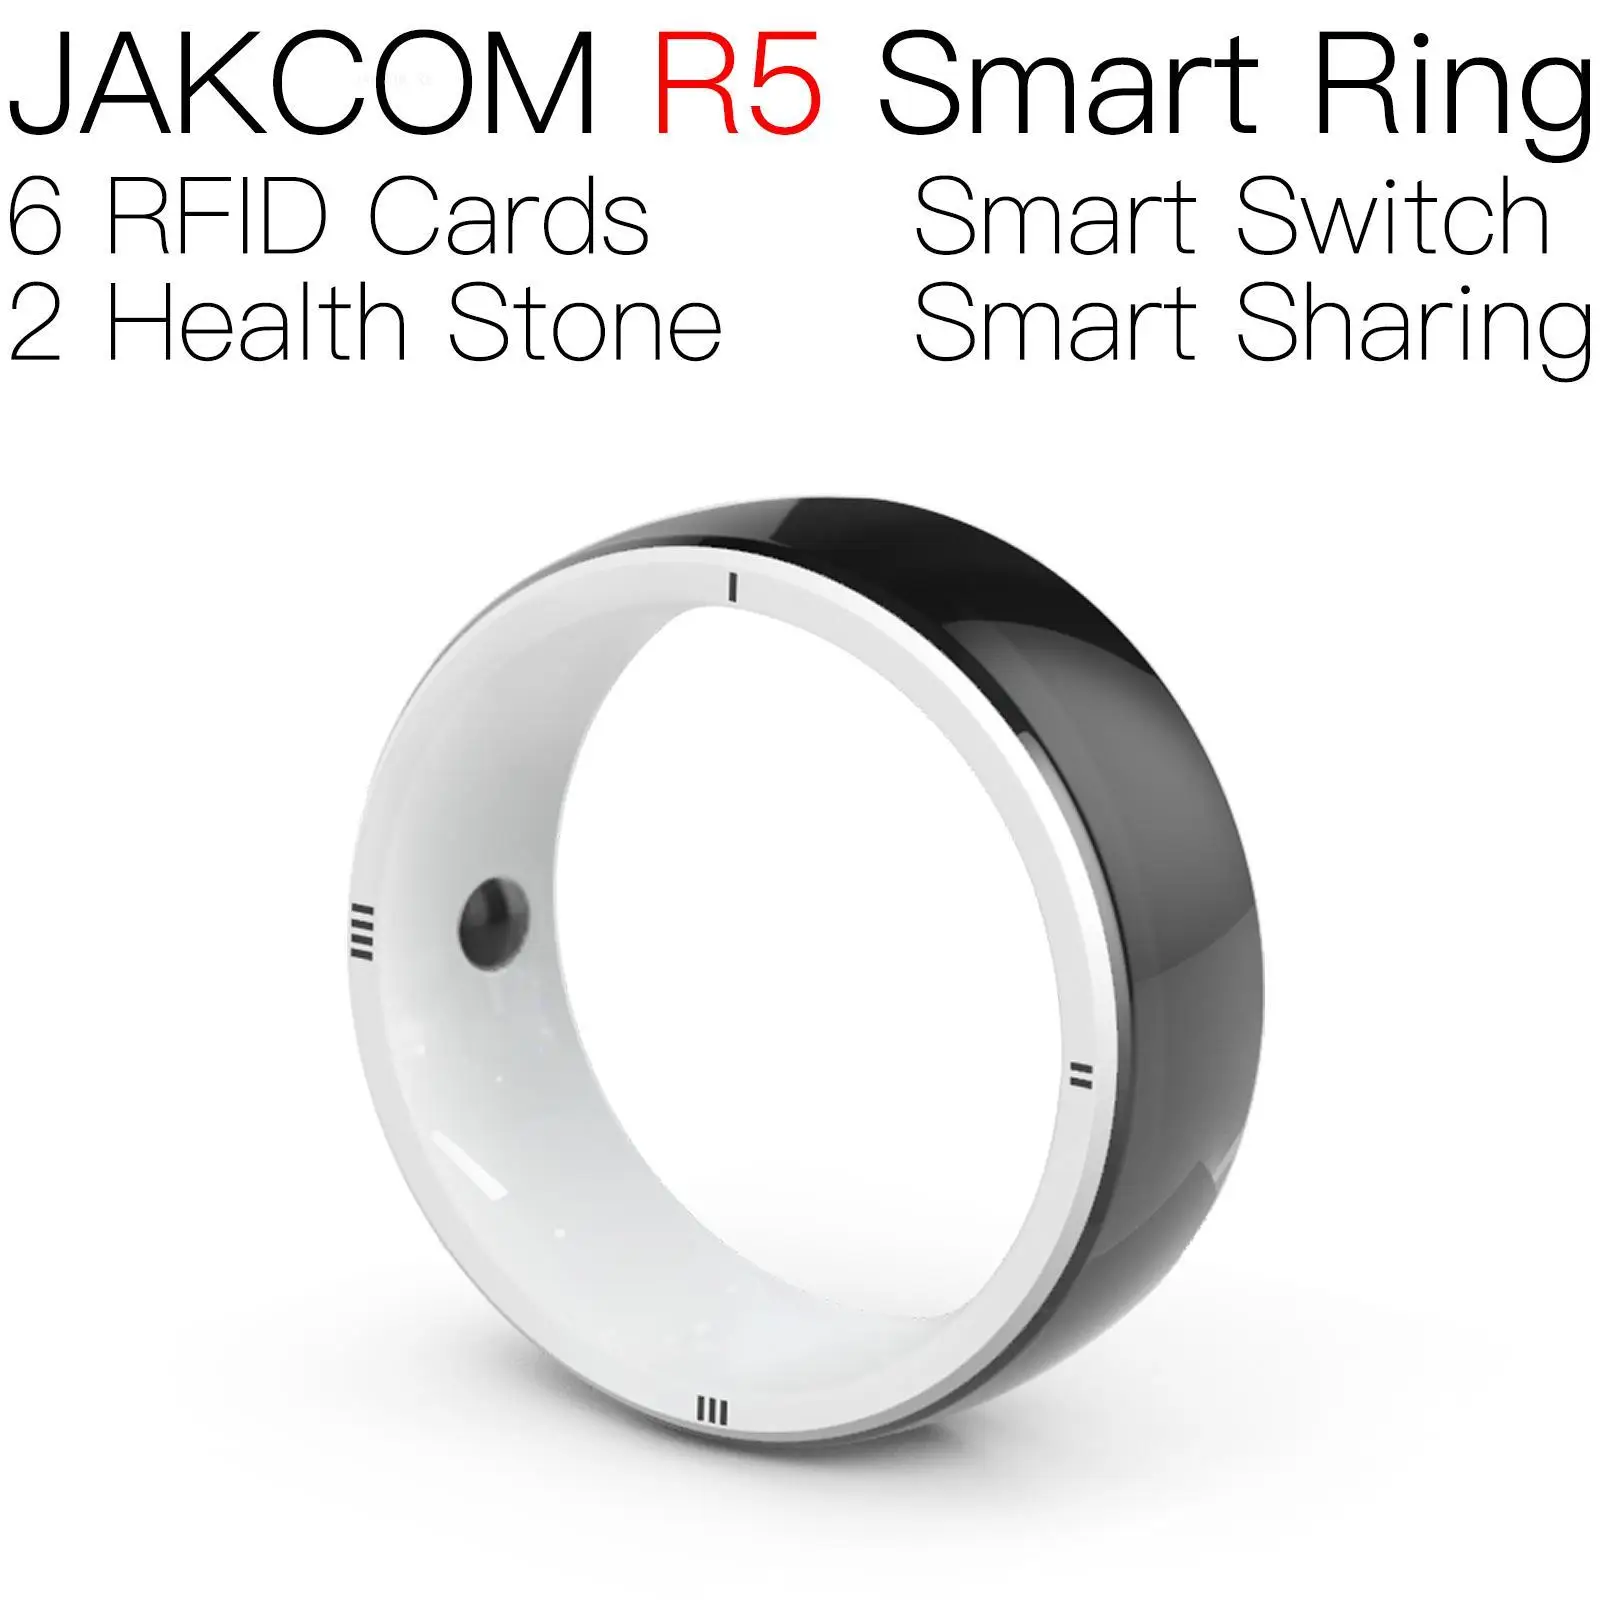 

JAKCOM R5 Smart Ring Nice than new horizon nadine rfid 10m classic 1k access card 125khz sticker iso 15693